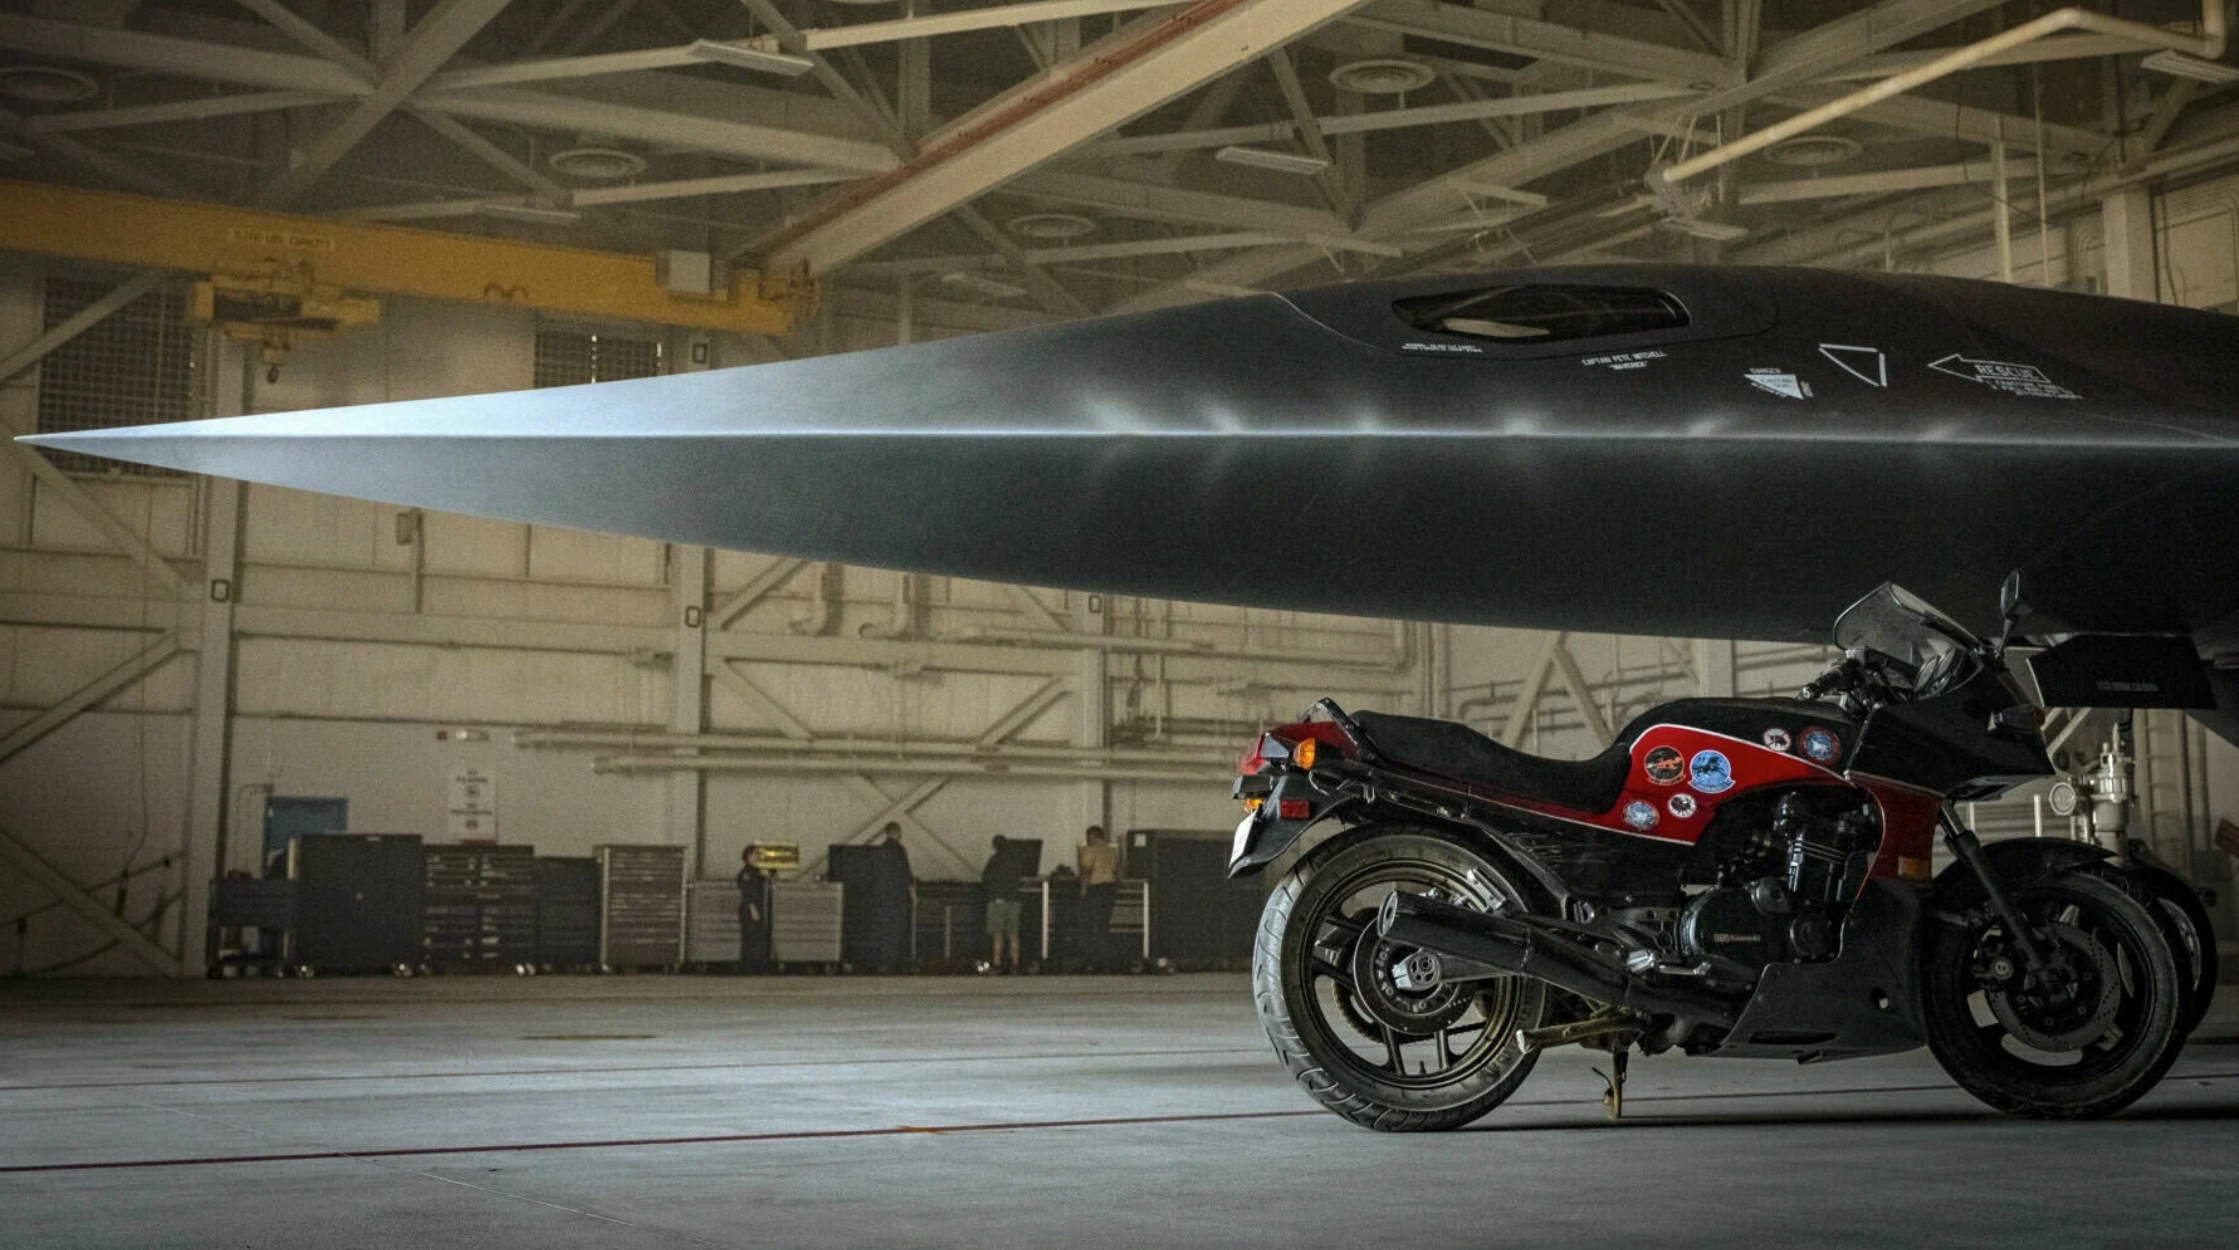 Darkstar hypersonic plane from Top Gun 2: Maveric. Secret Projects Forum